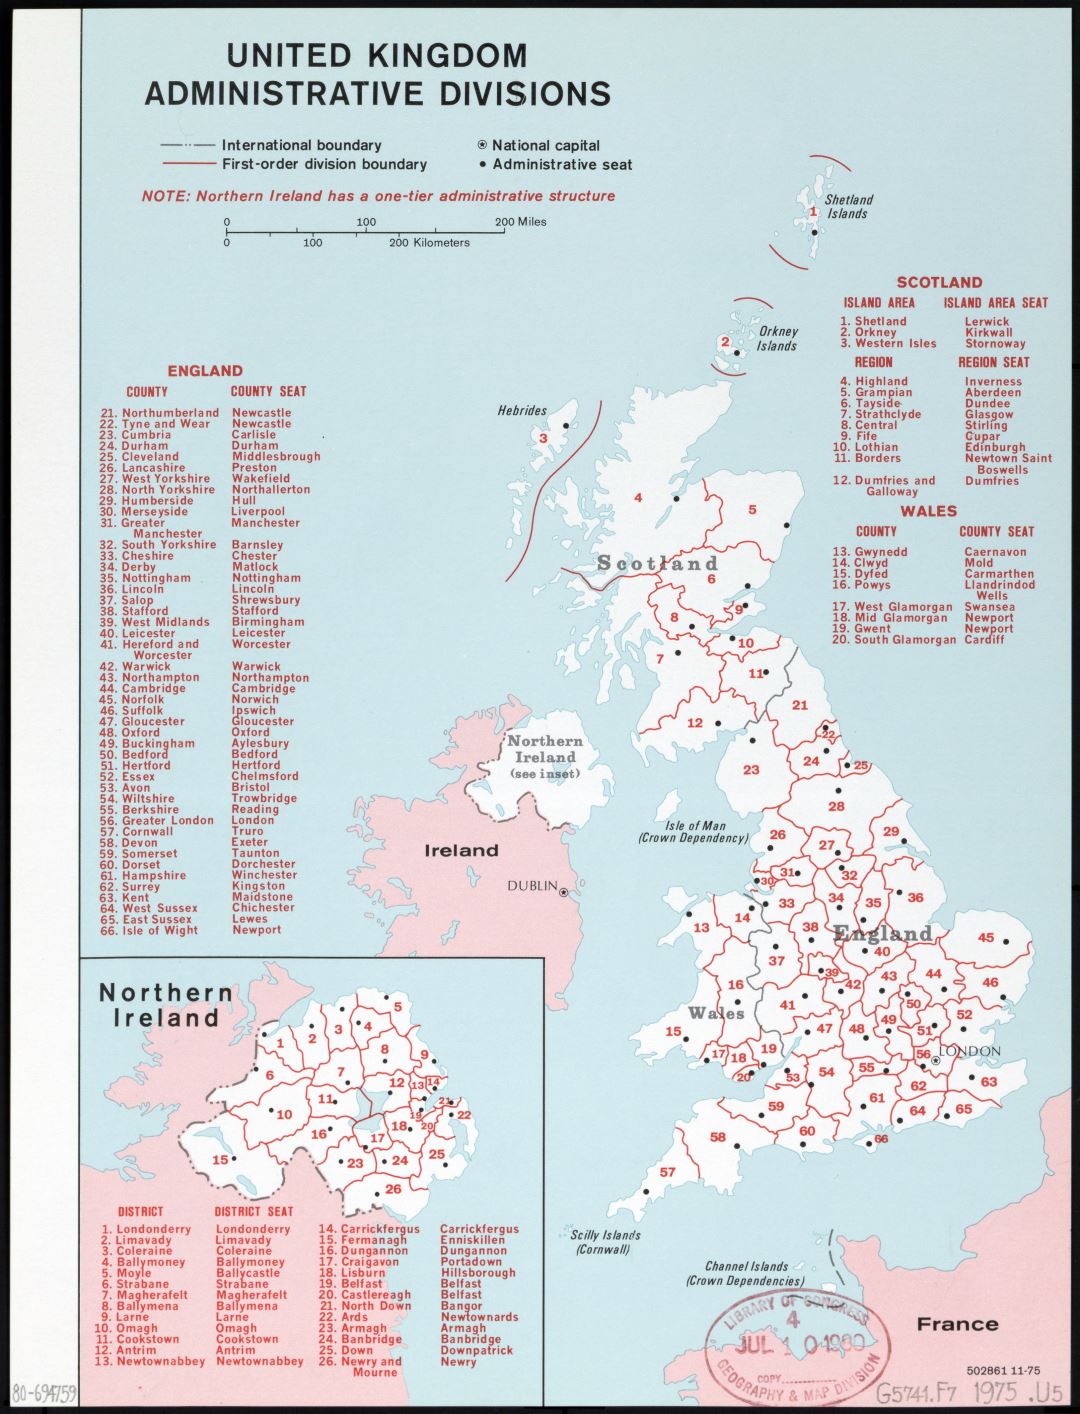 A gran escala mapa de administrativas divisiones del Reino Unido - 1975